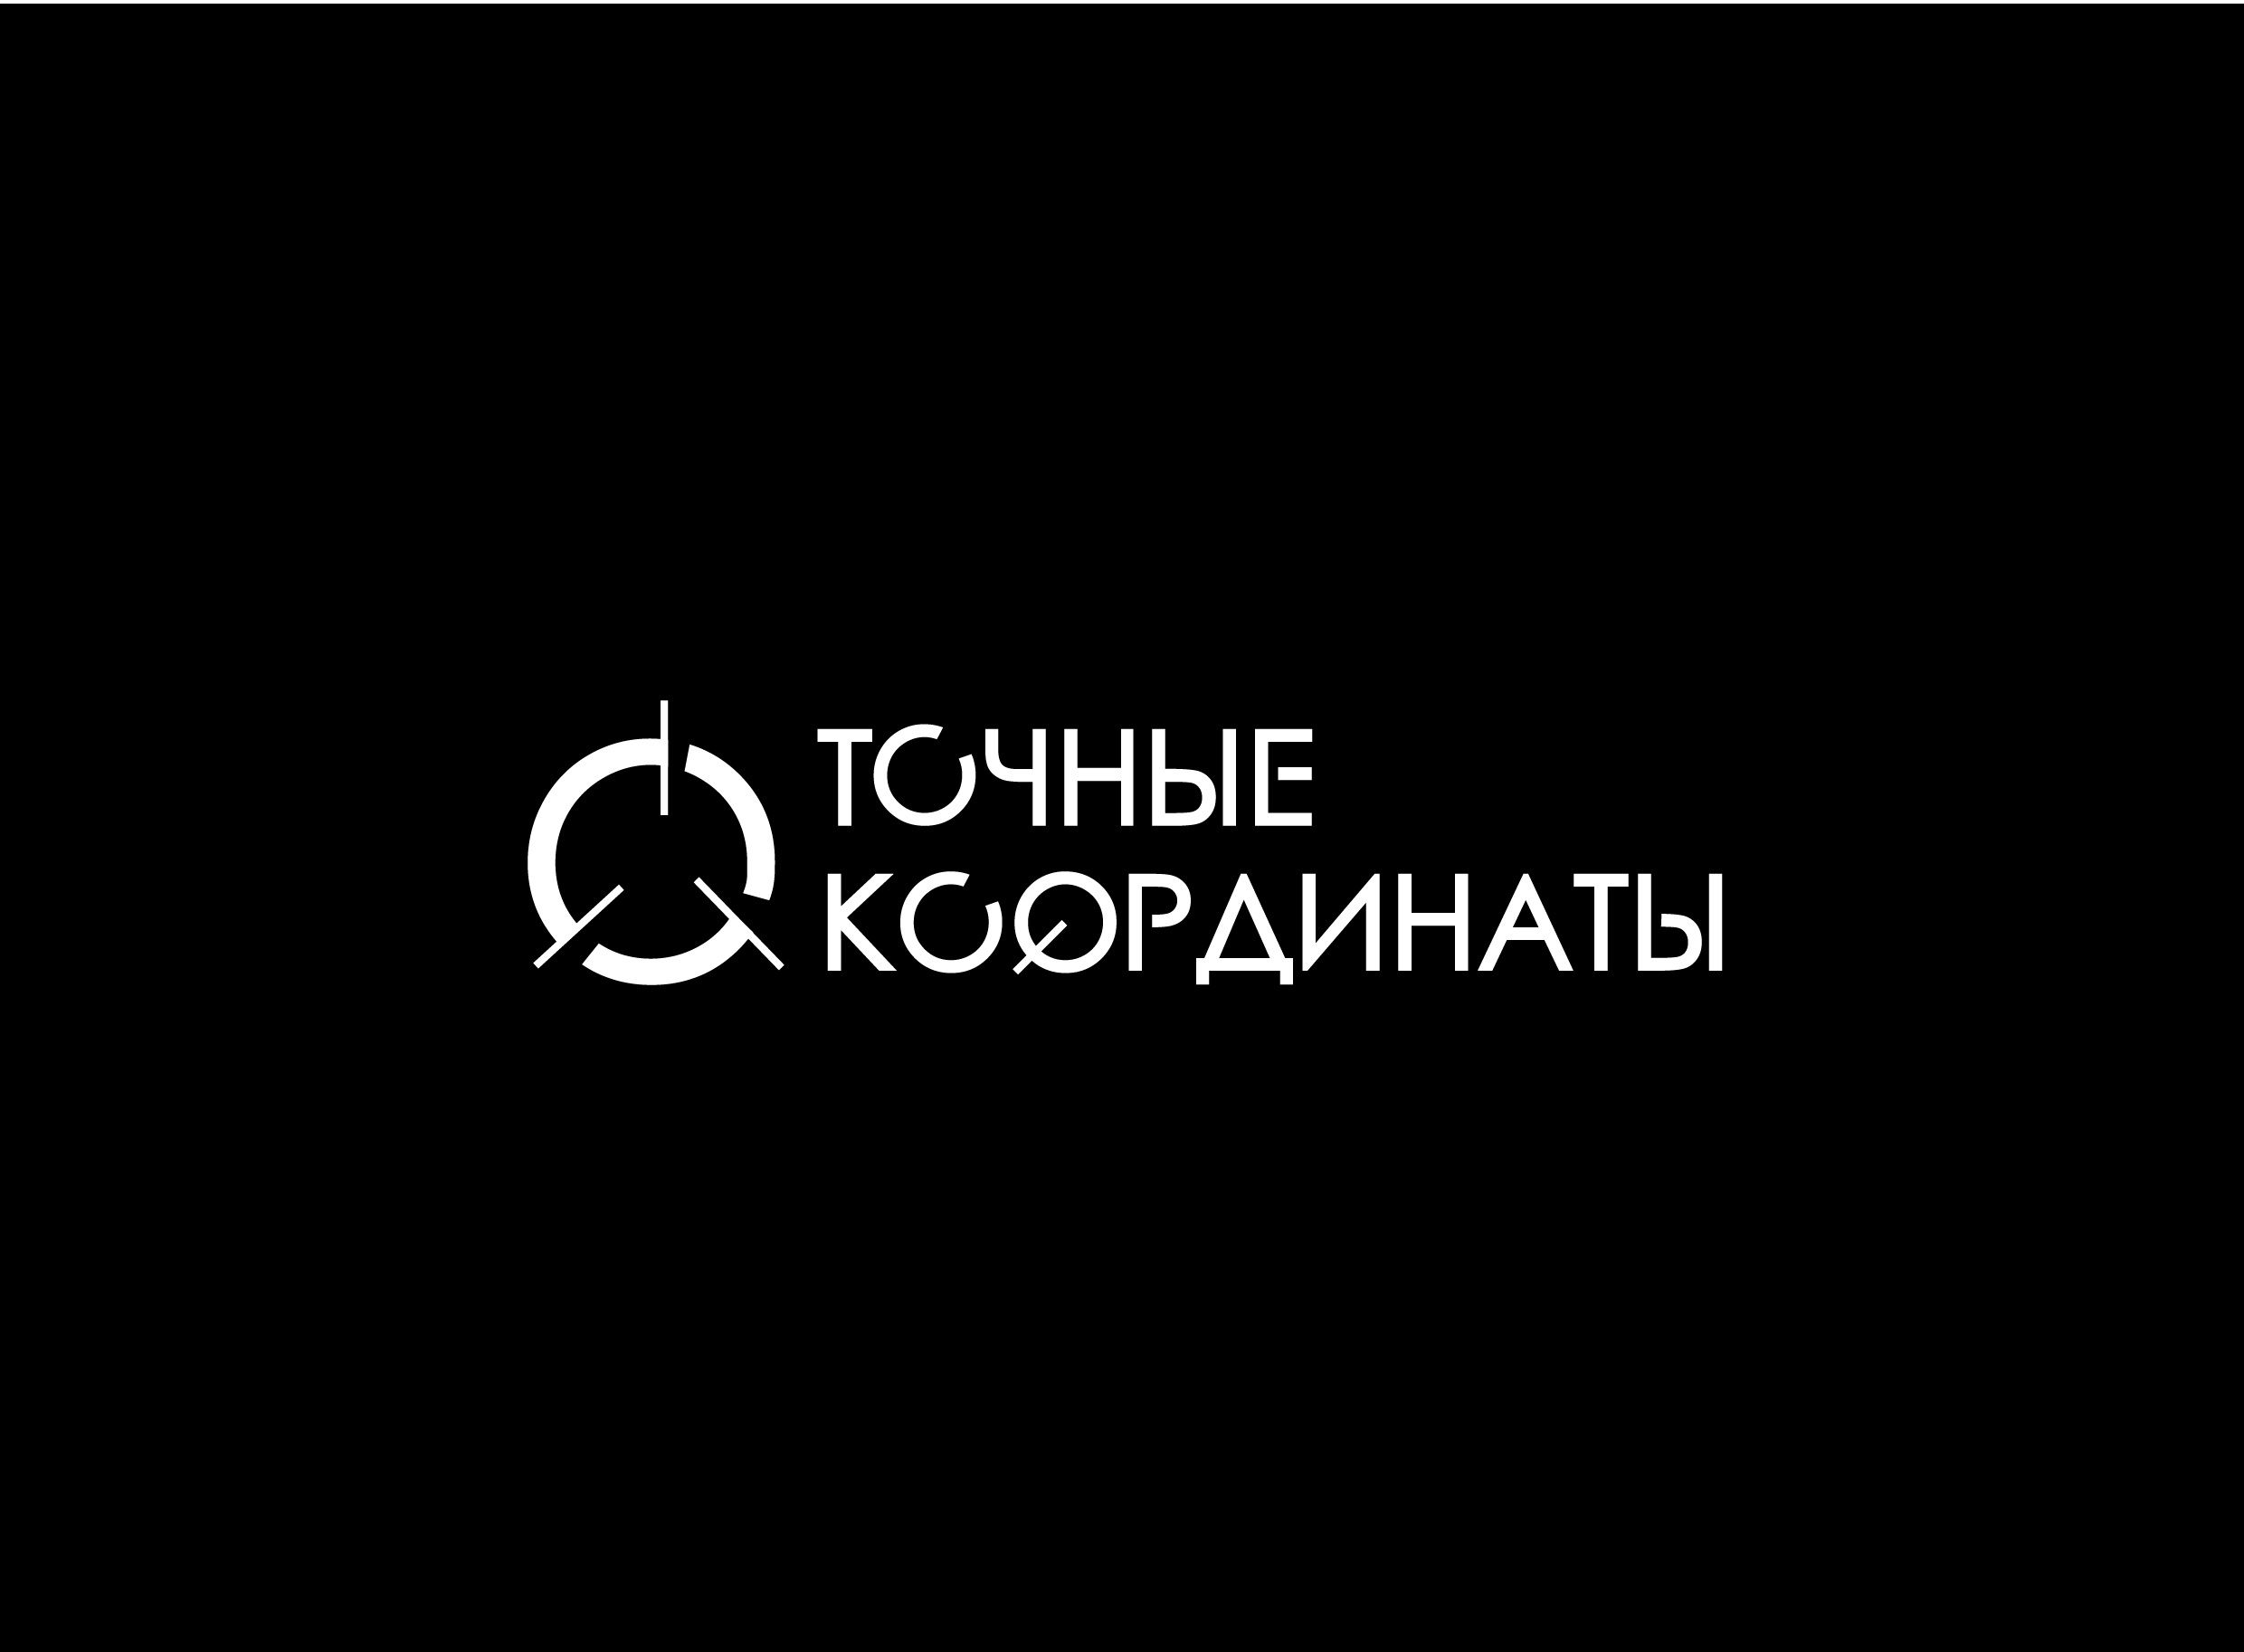 Разработка логотипа за 1 000 руб.